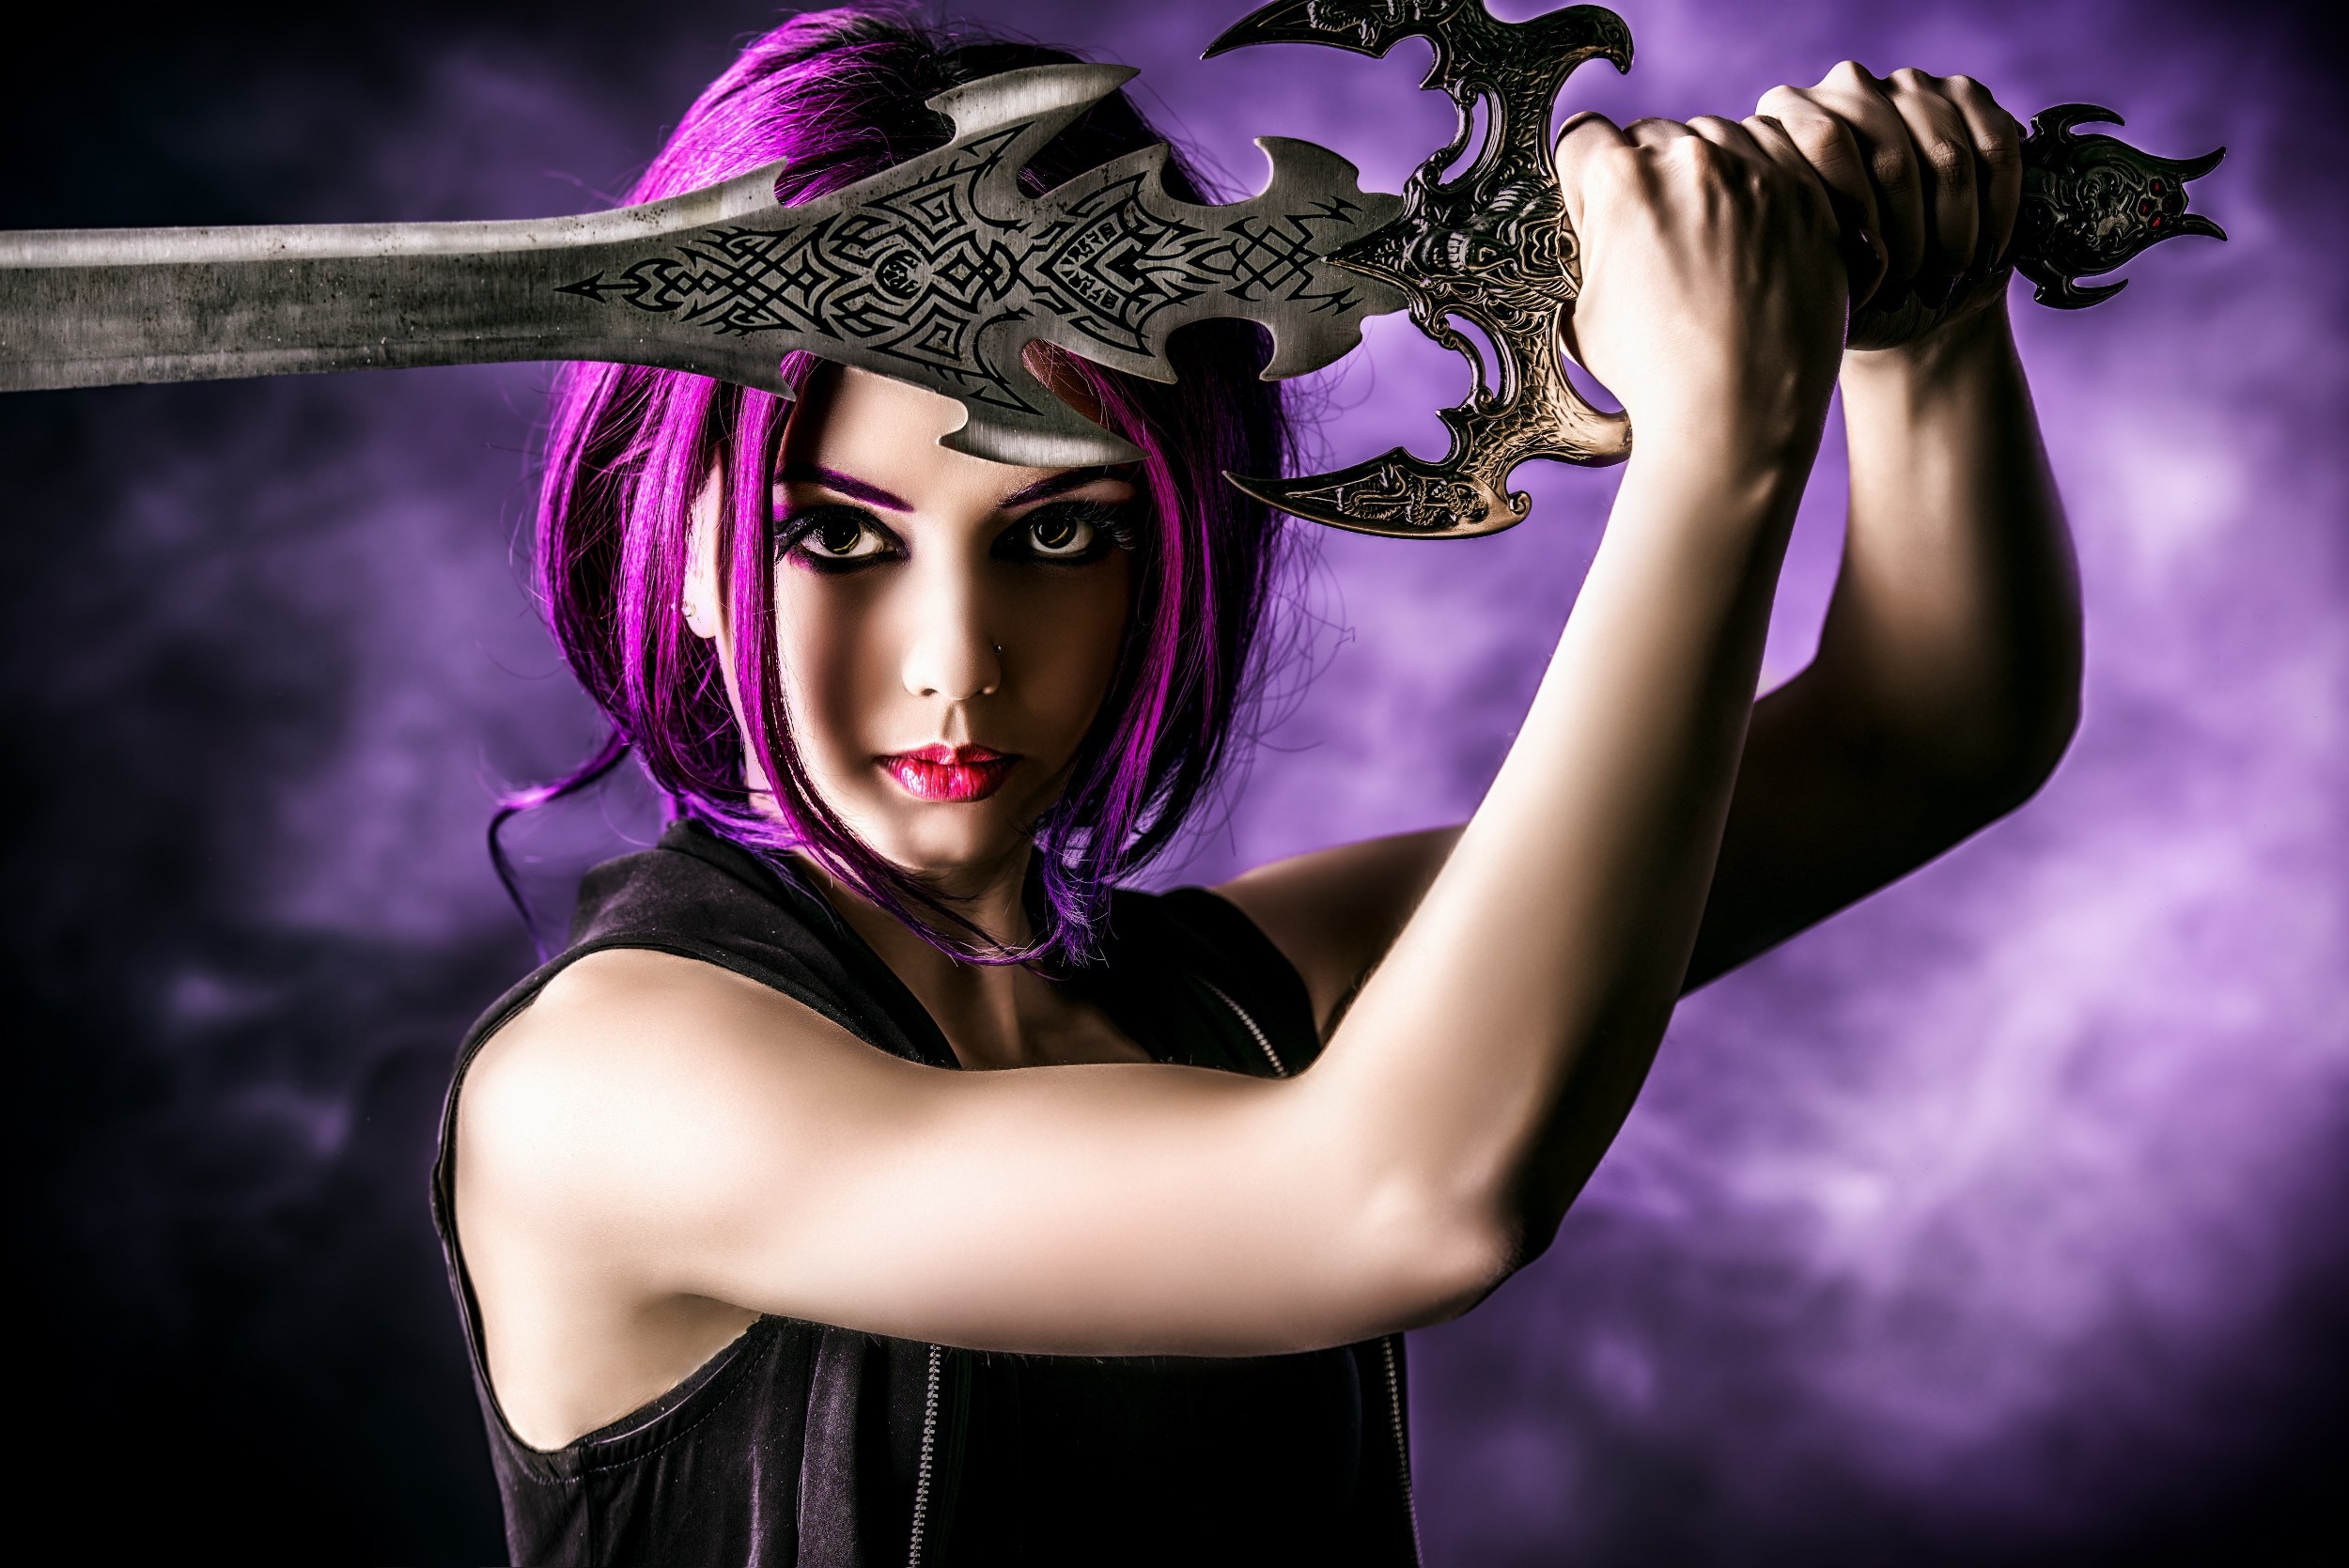 General 2500x1669 fantasy art sword artwork women purple hair makeup looking at viewer weapon women with swords digital art